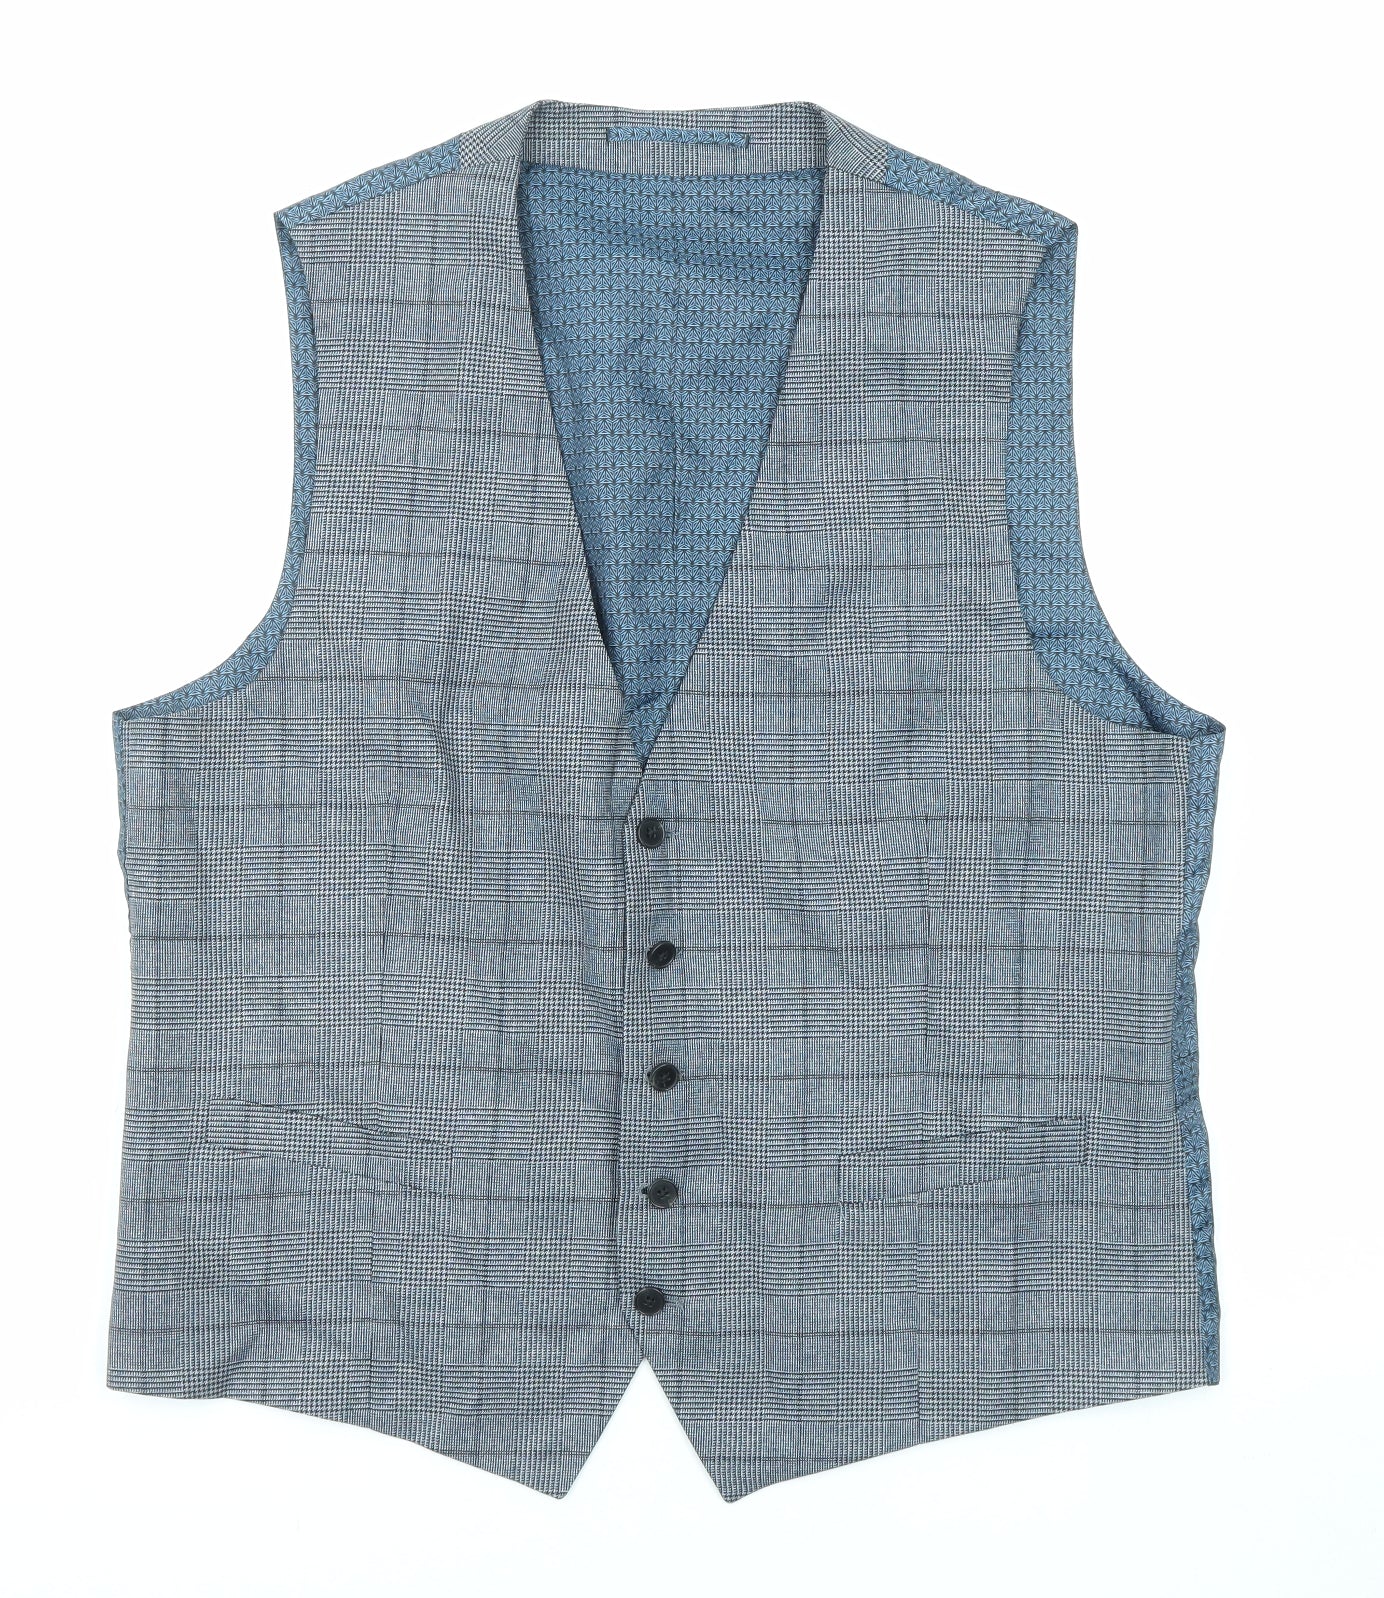 Skopes Mens Blue Plaid Polyester Jacket Suit Waistcoat Size 44 Regular